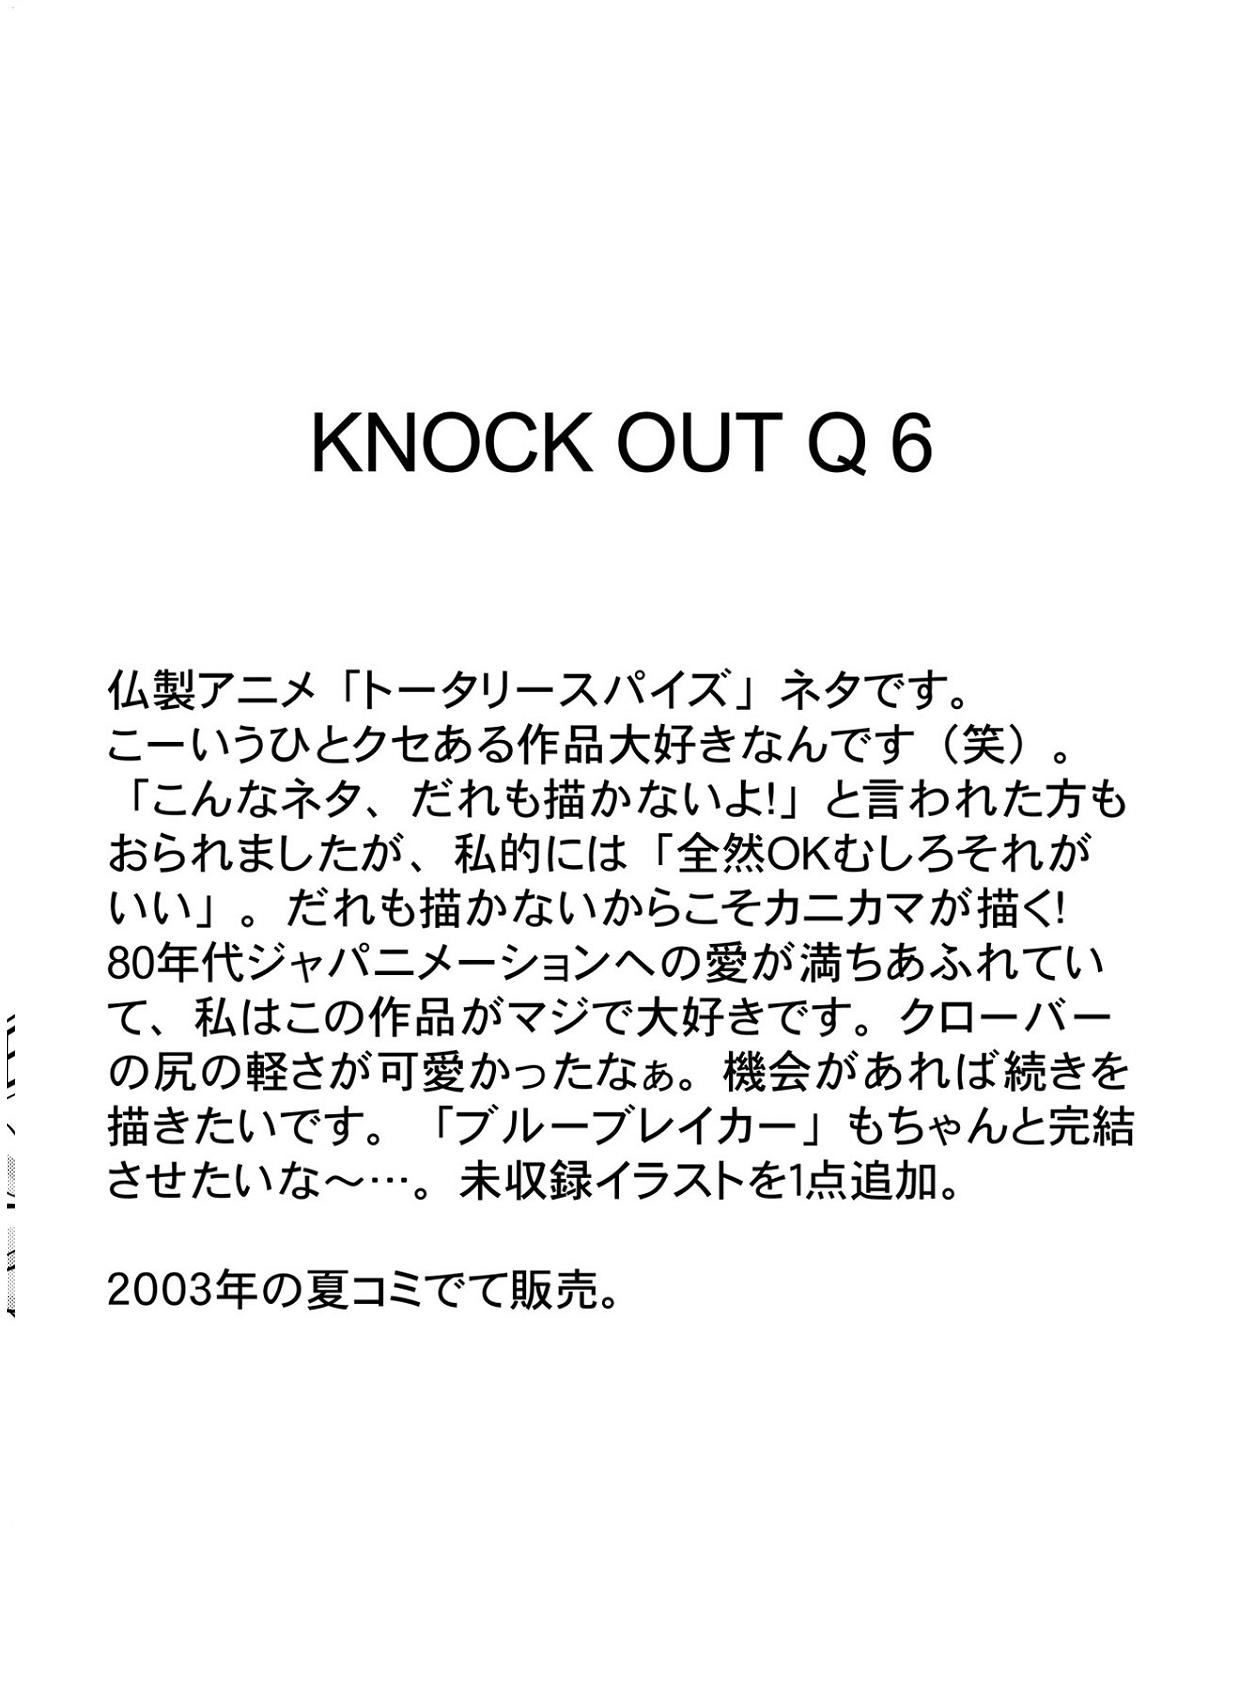 Knockout-Q 77